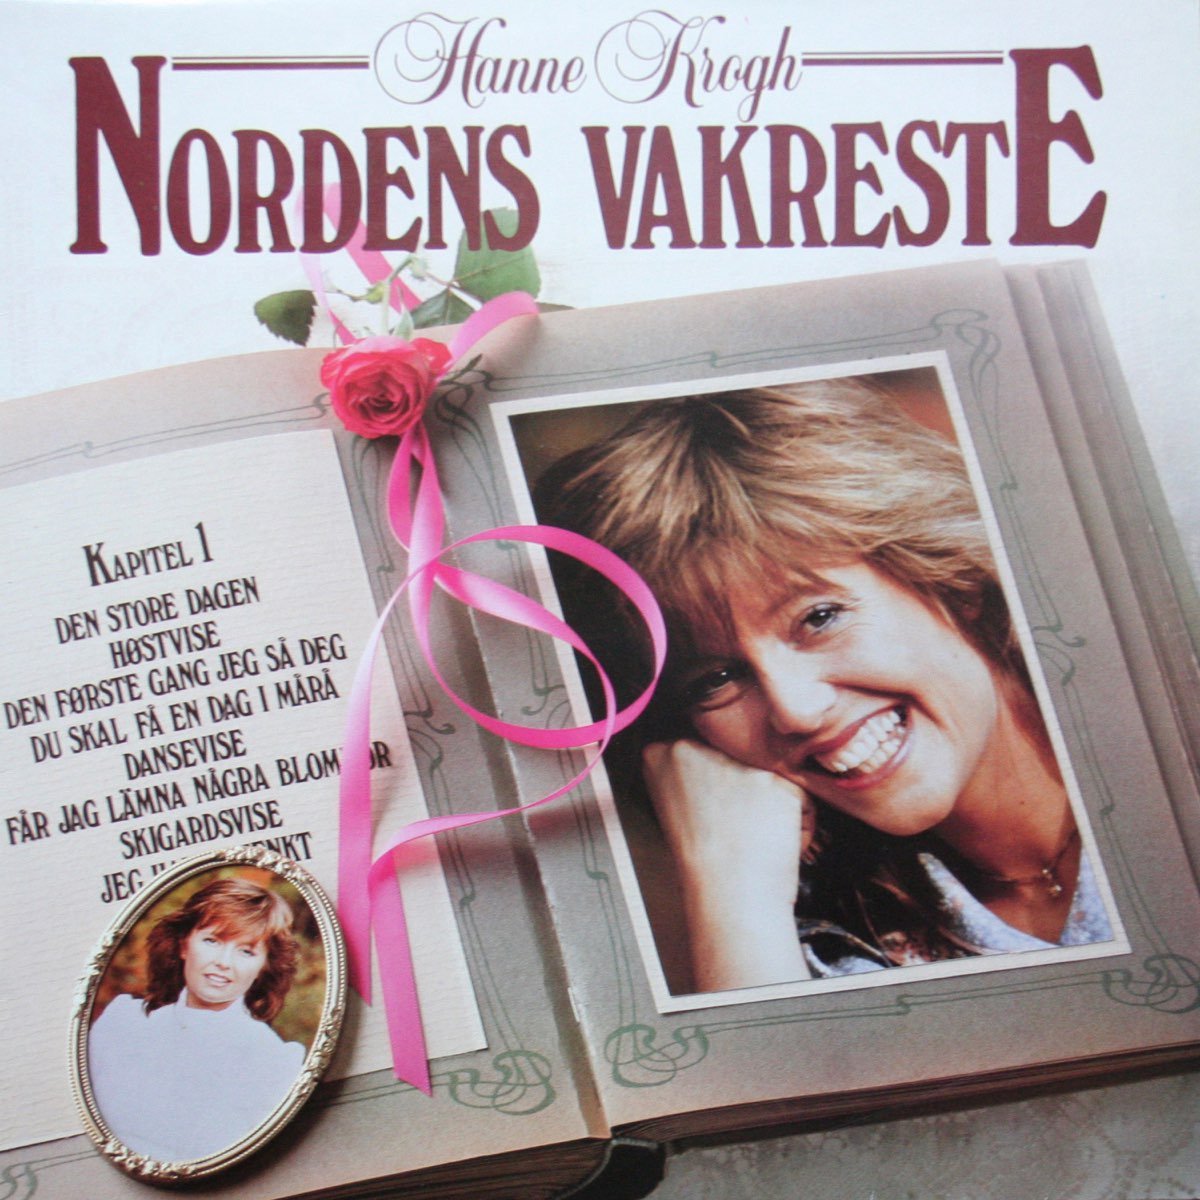 Nordens vakreste by Hanne Krogh on Apple Music